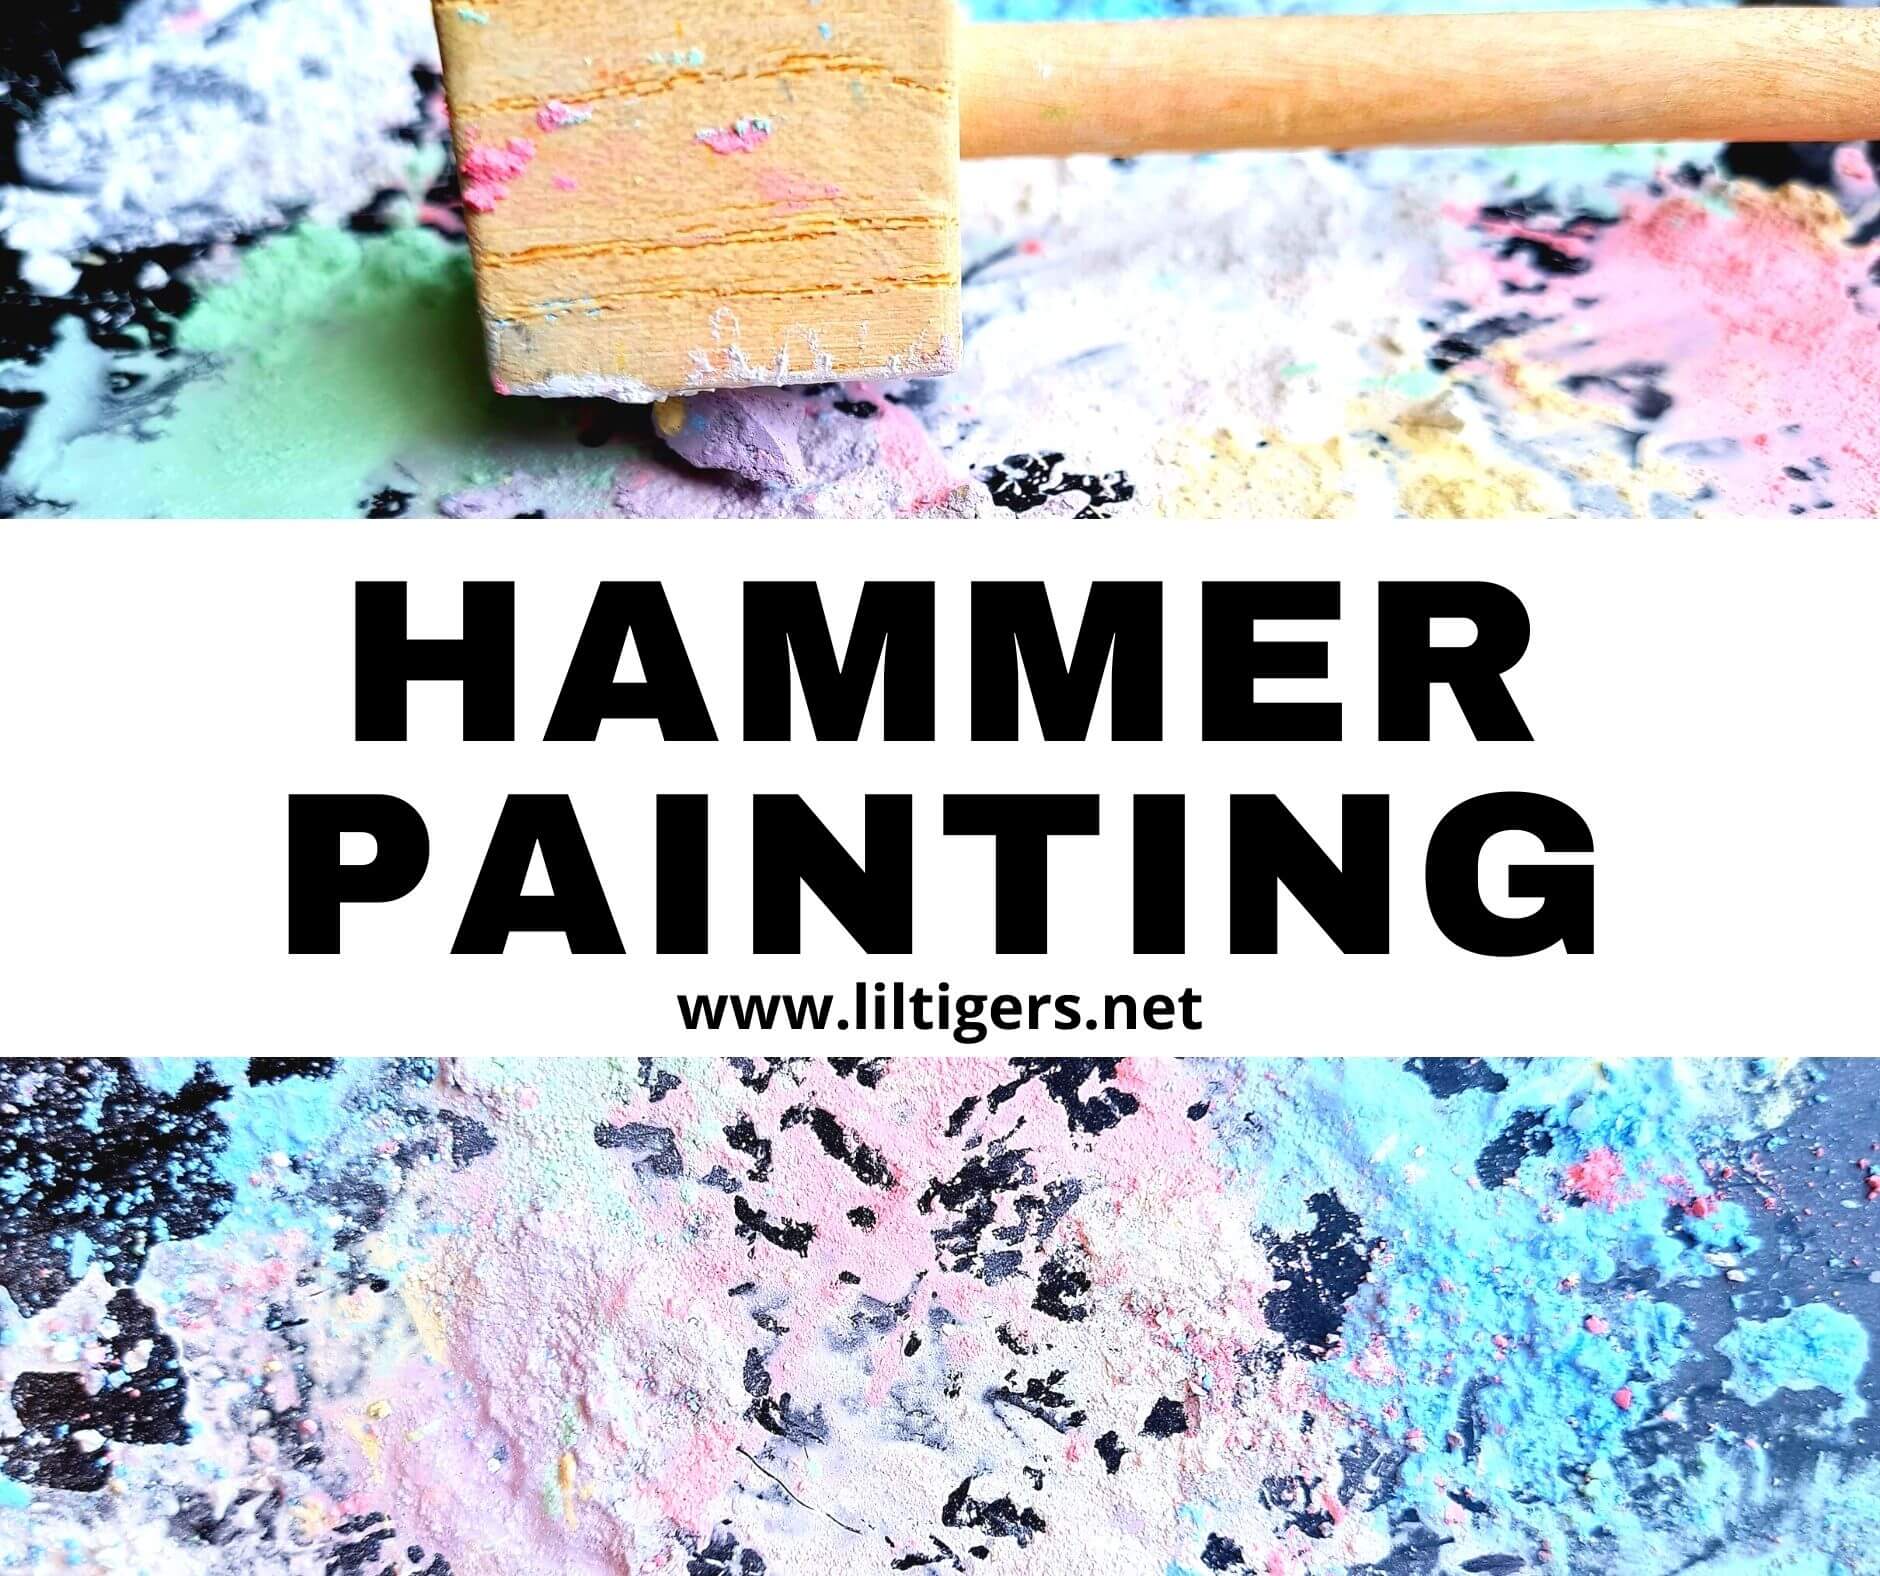 Hammer painting for kids